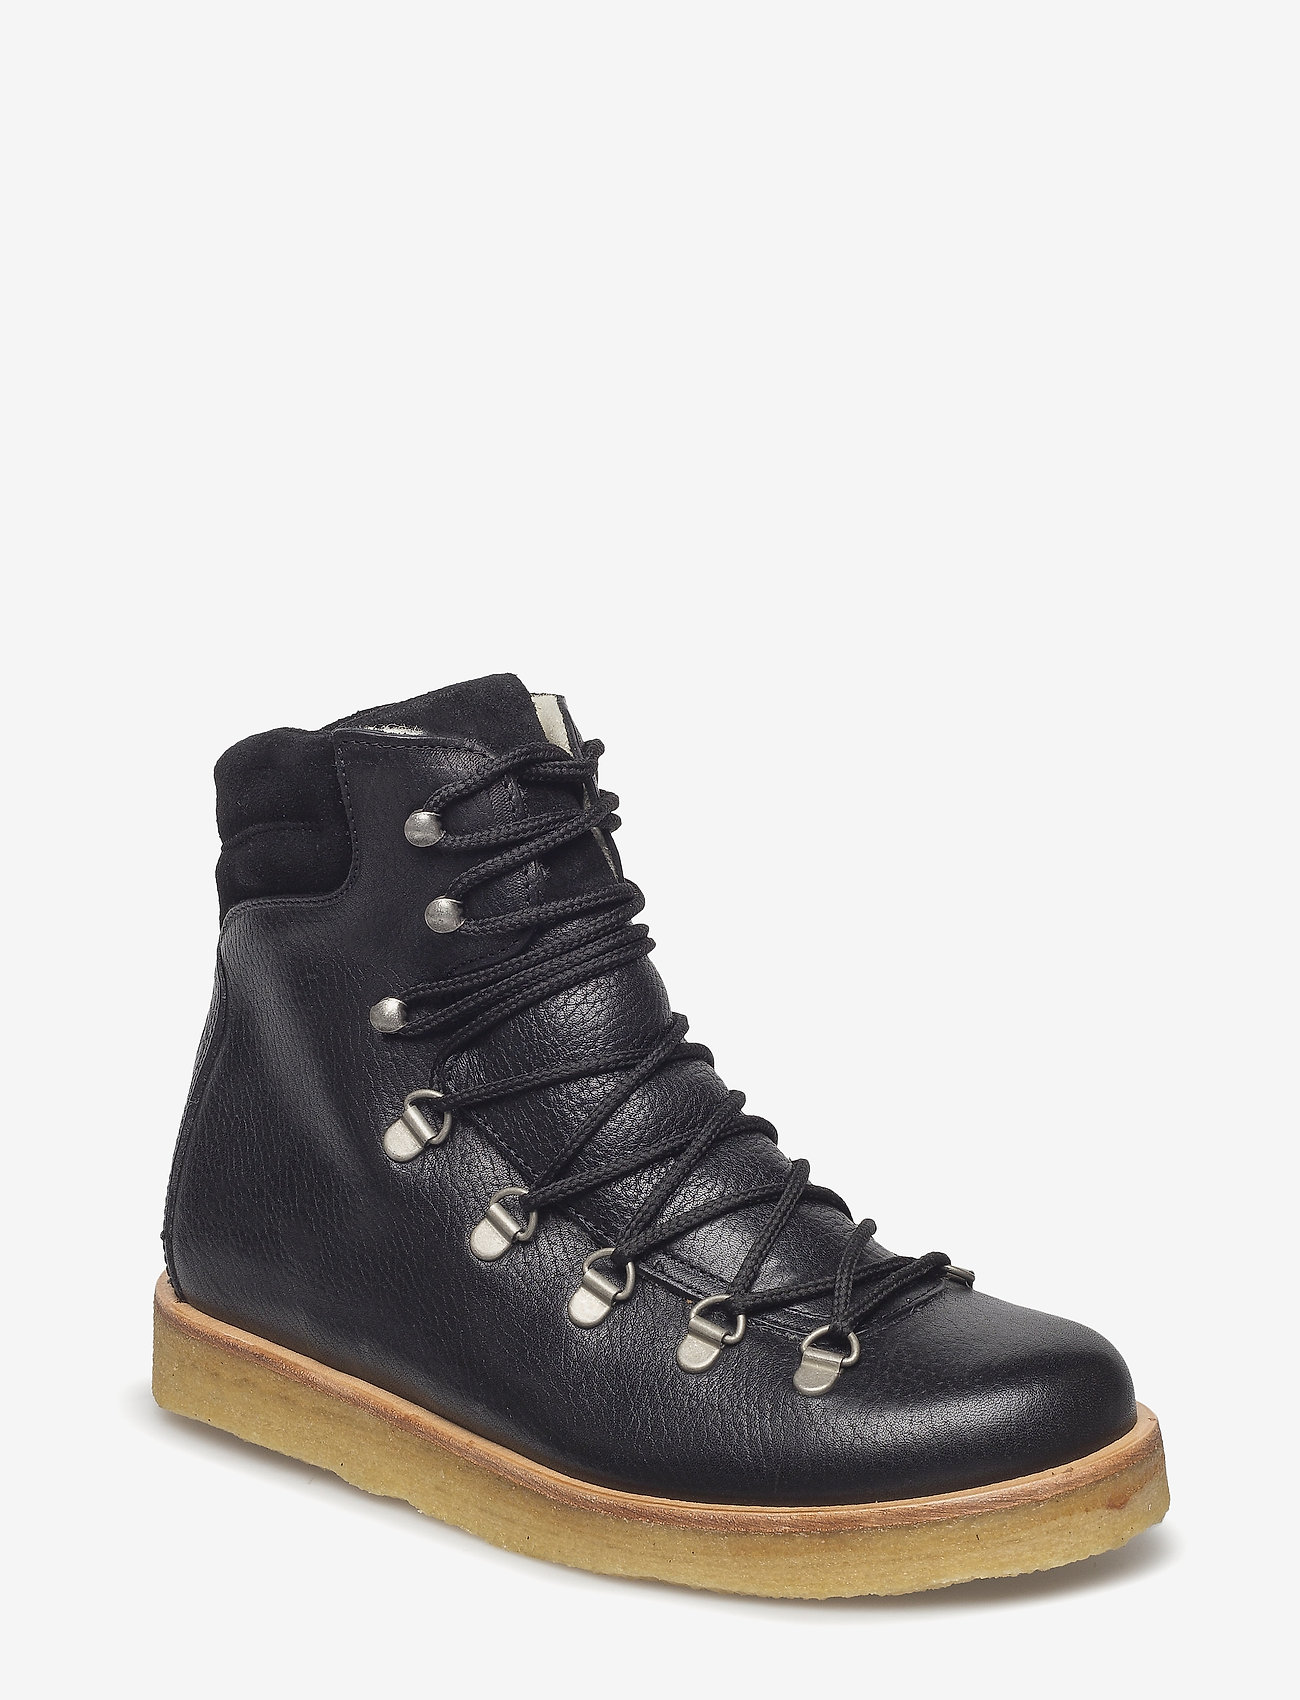 ANGULUS - Boots - flat - with laces - platte enkellaarsjes - 2504/1163 black/black - 0